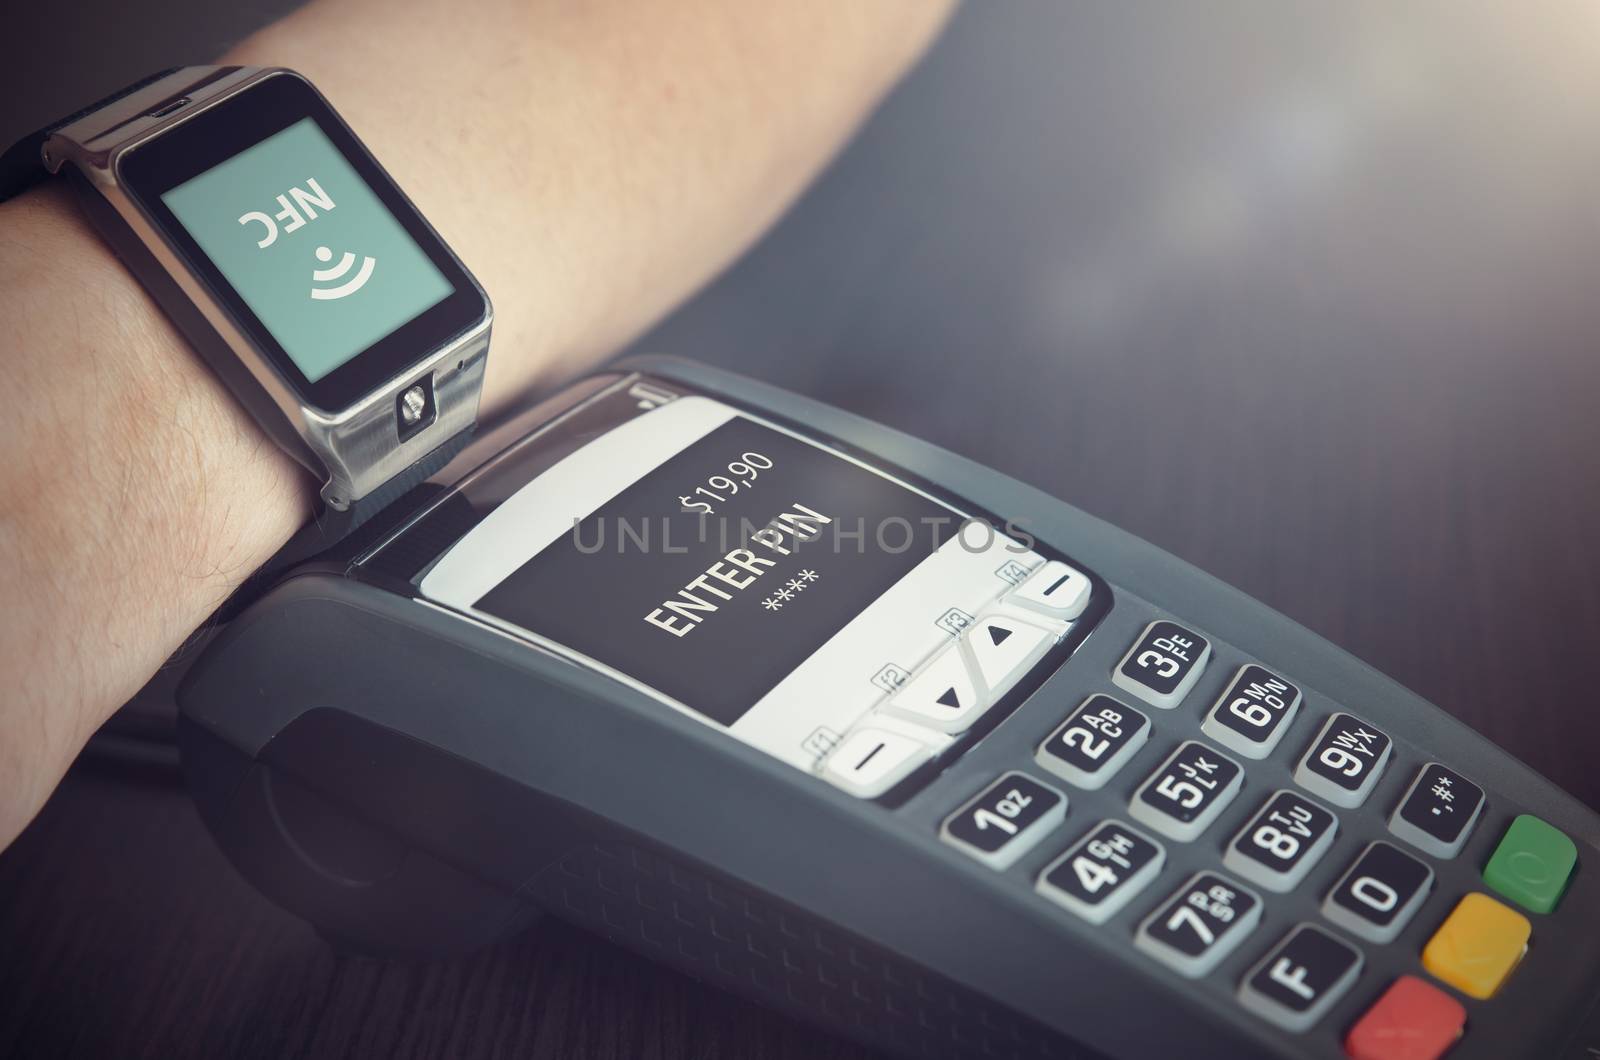 Man making payment through smartwatch via NFC contactless technology